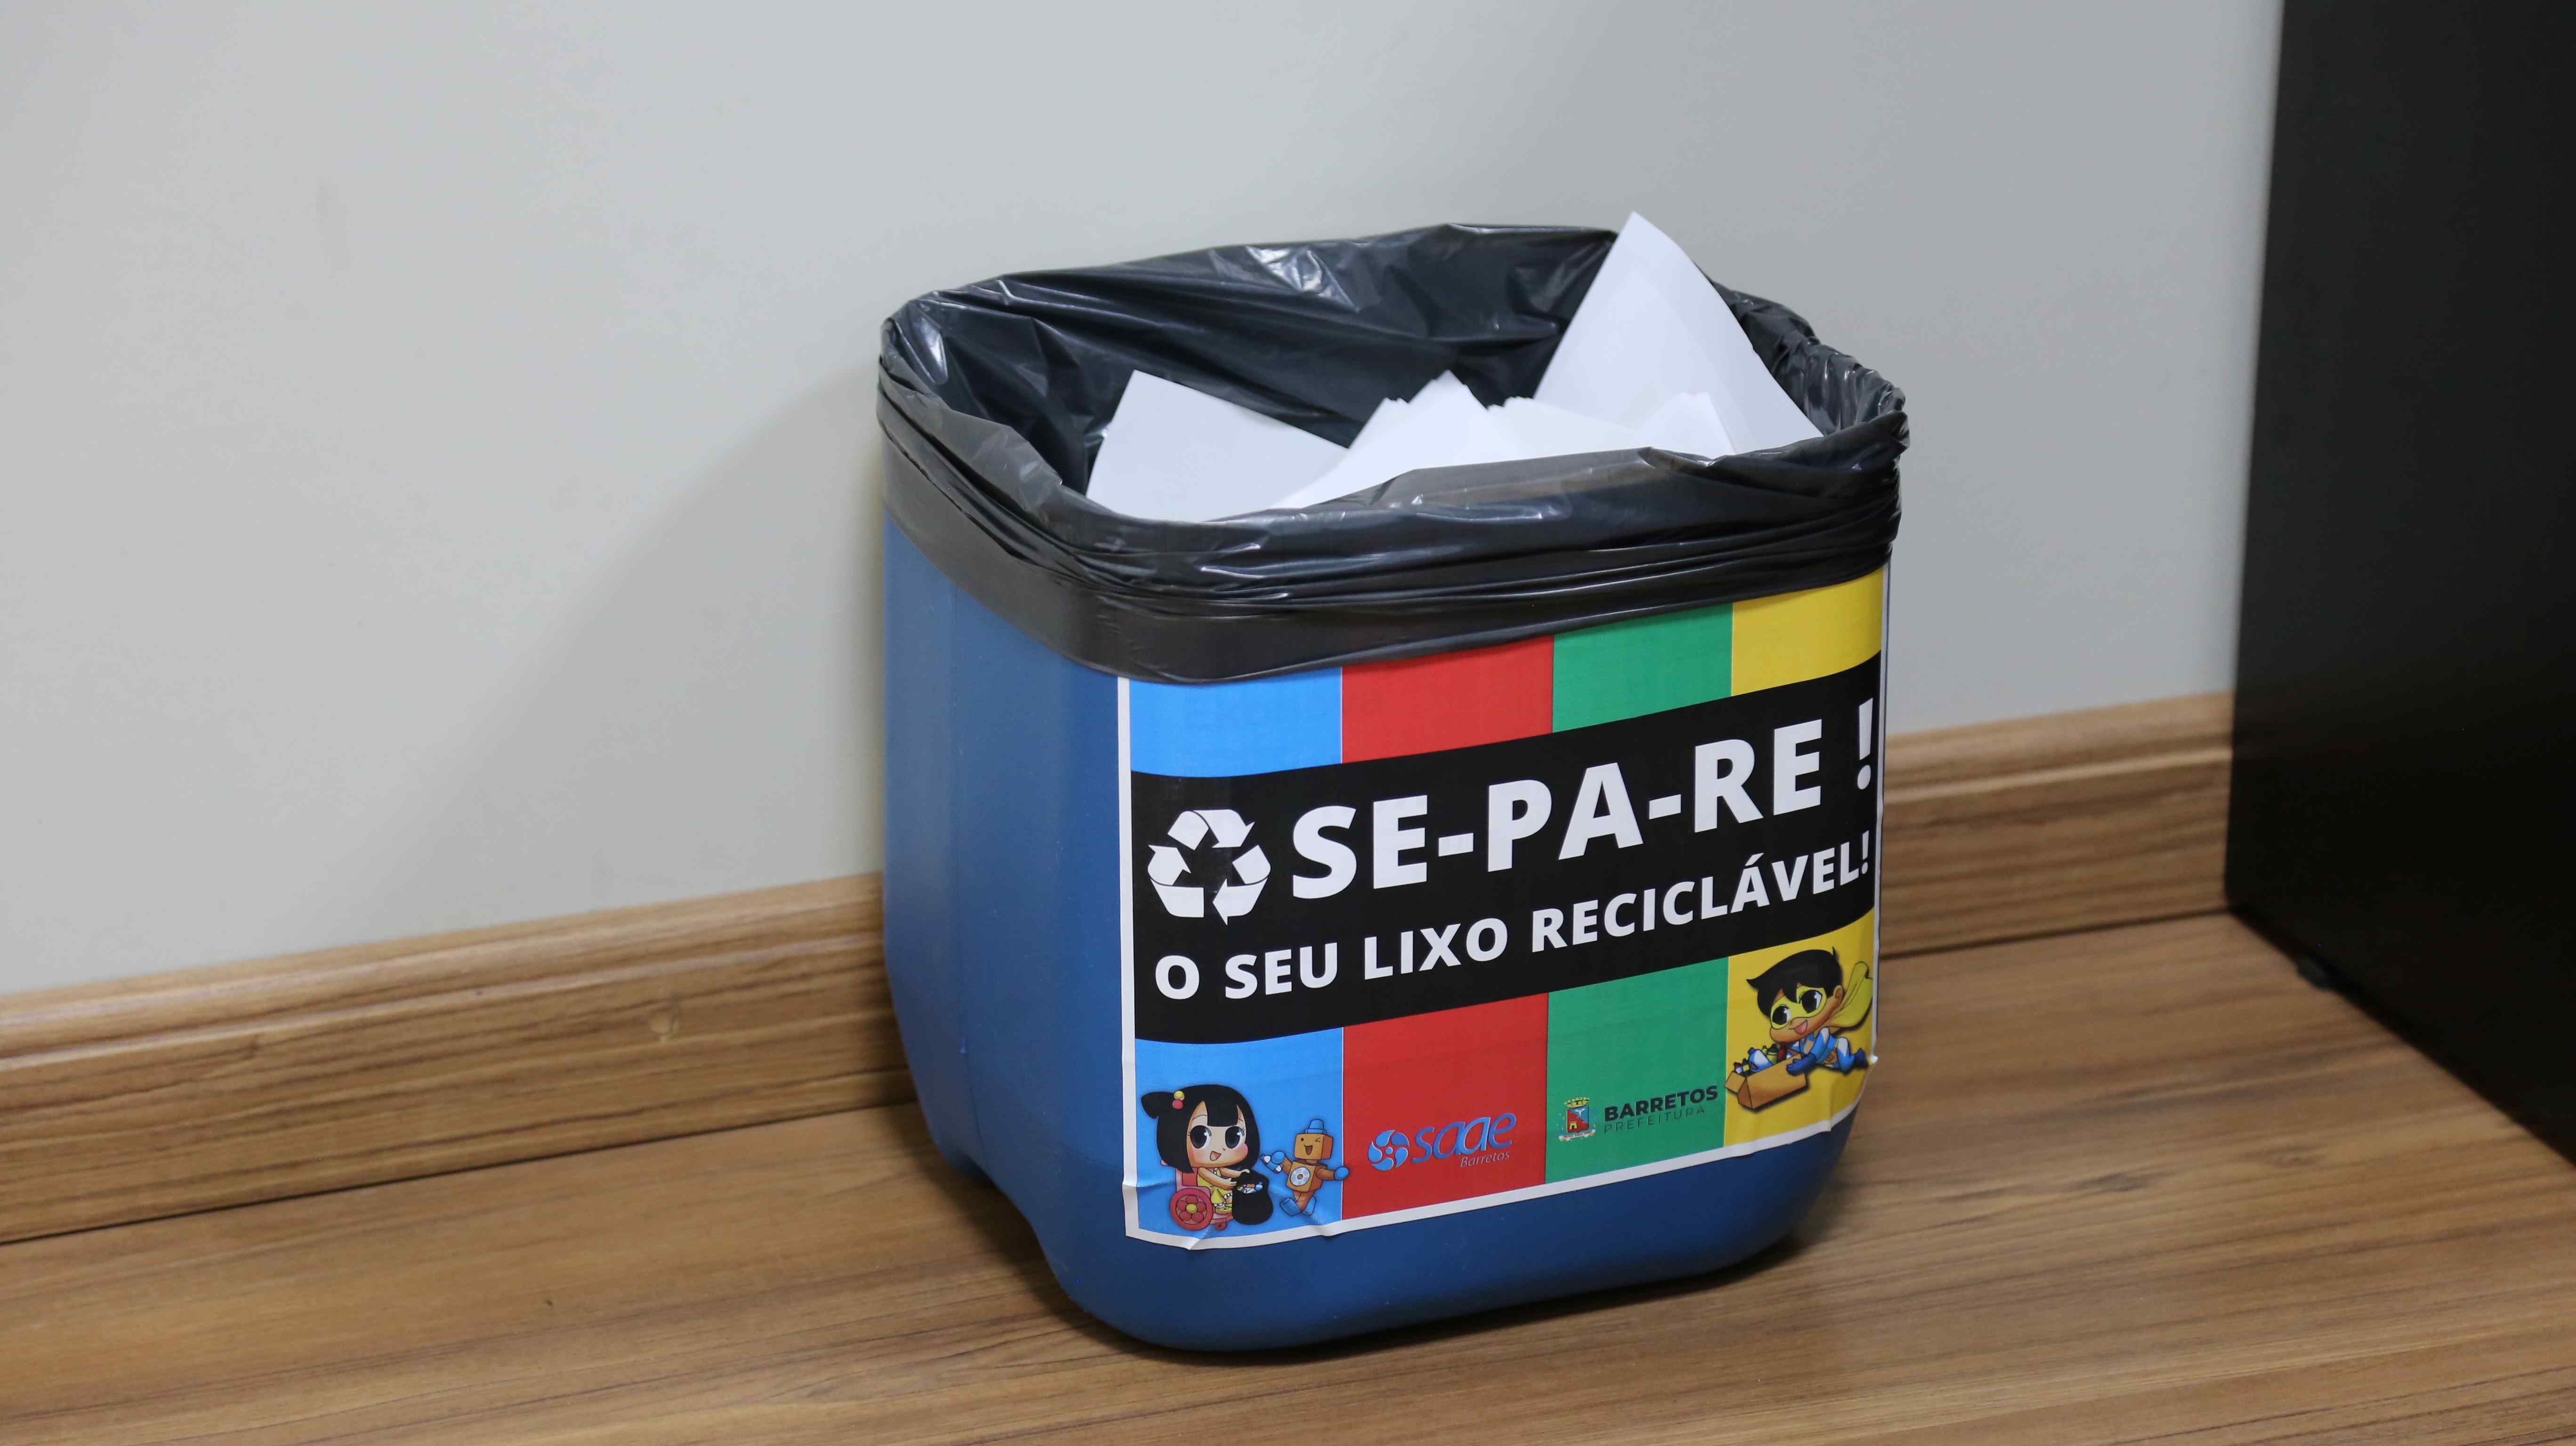 SAAE Barretos incentiva servidores ao descarte seletivo de lixo durante o expediente na sede central